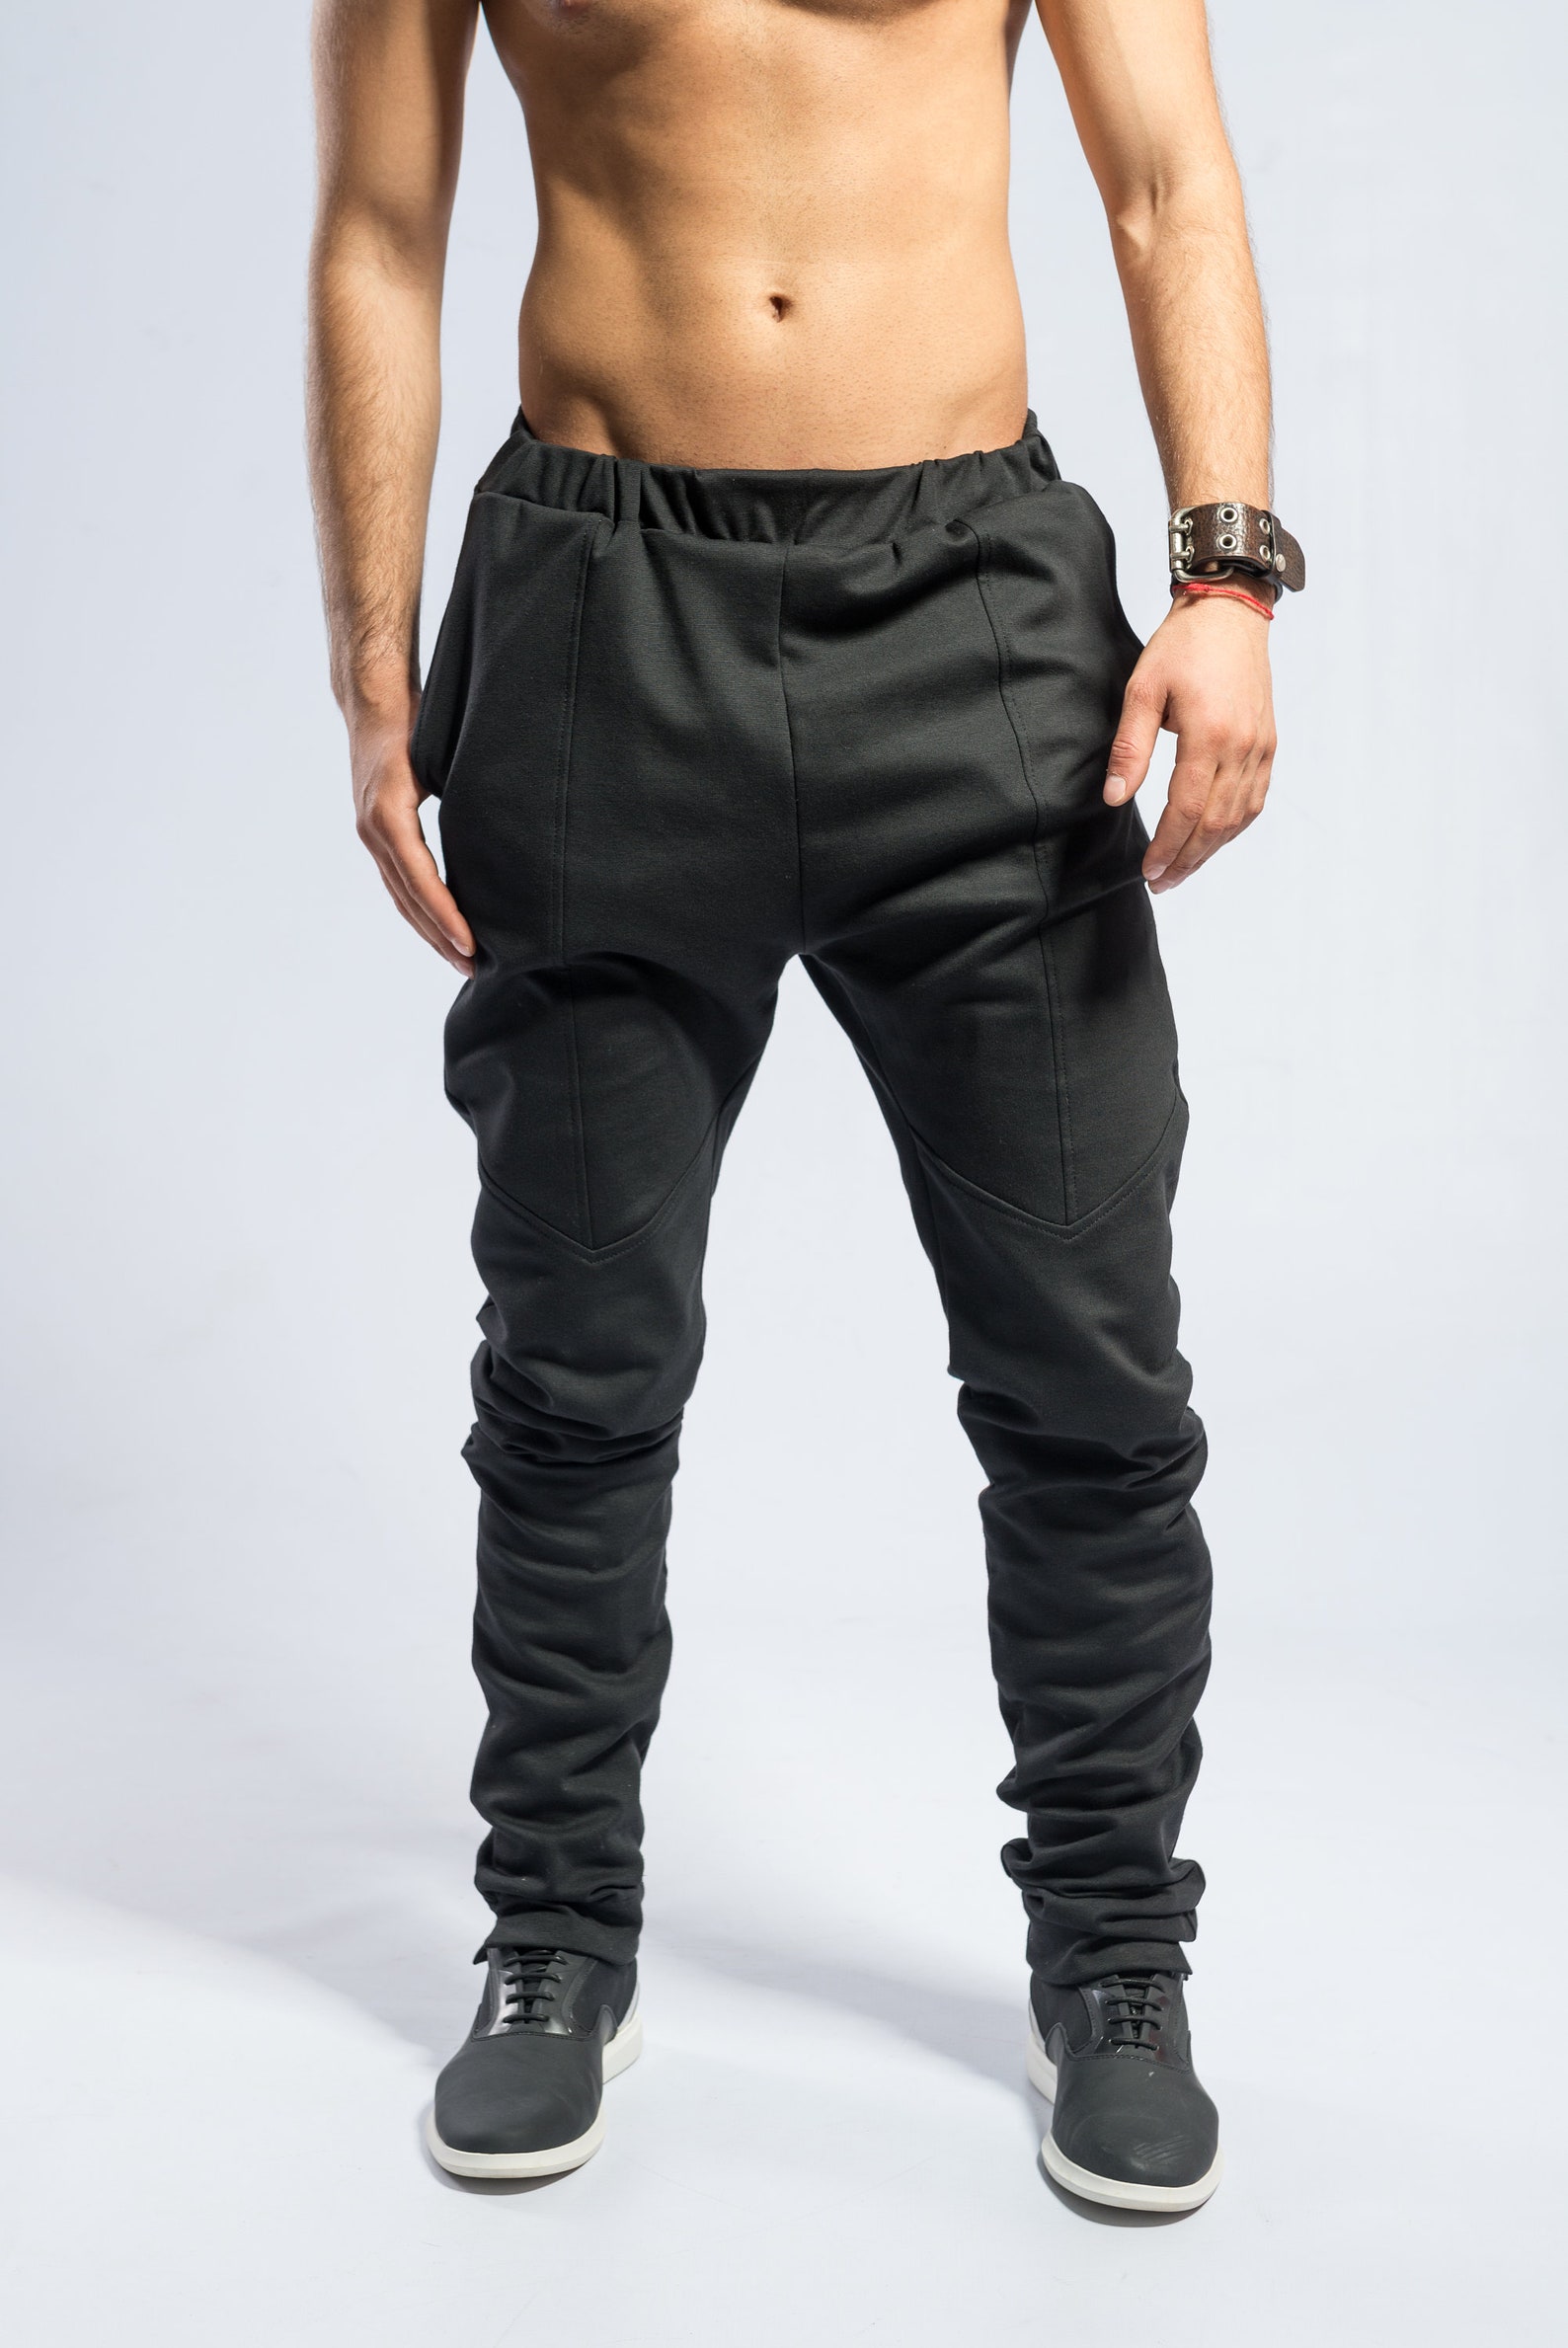 Minimalist Black Pants / Men's Ninja Pants / Black Avant | Etsy